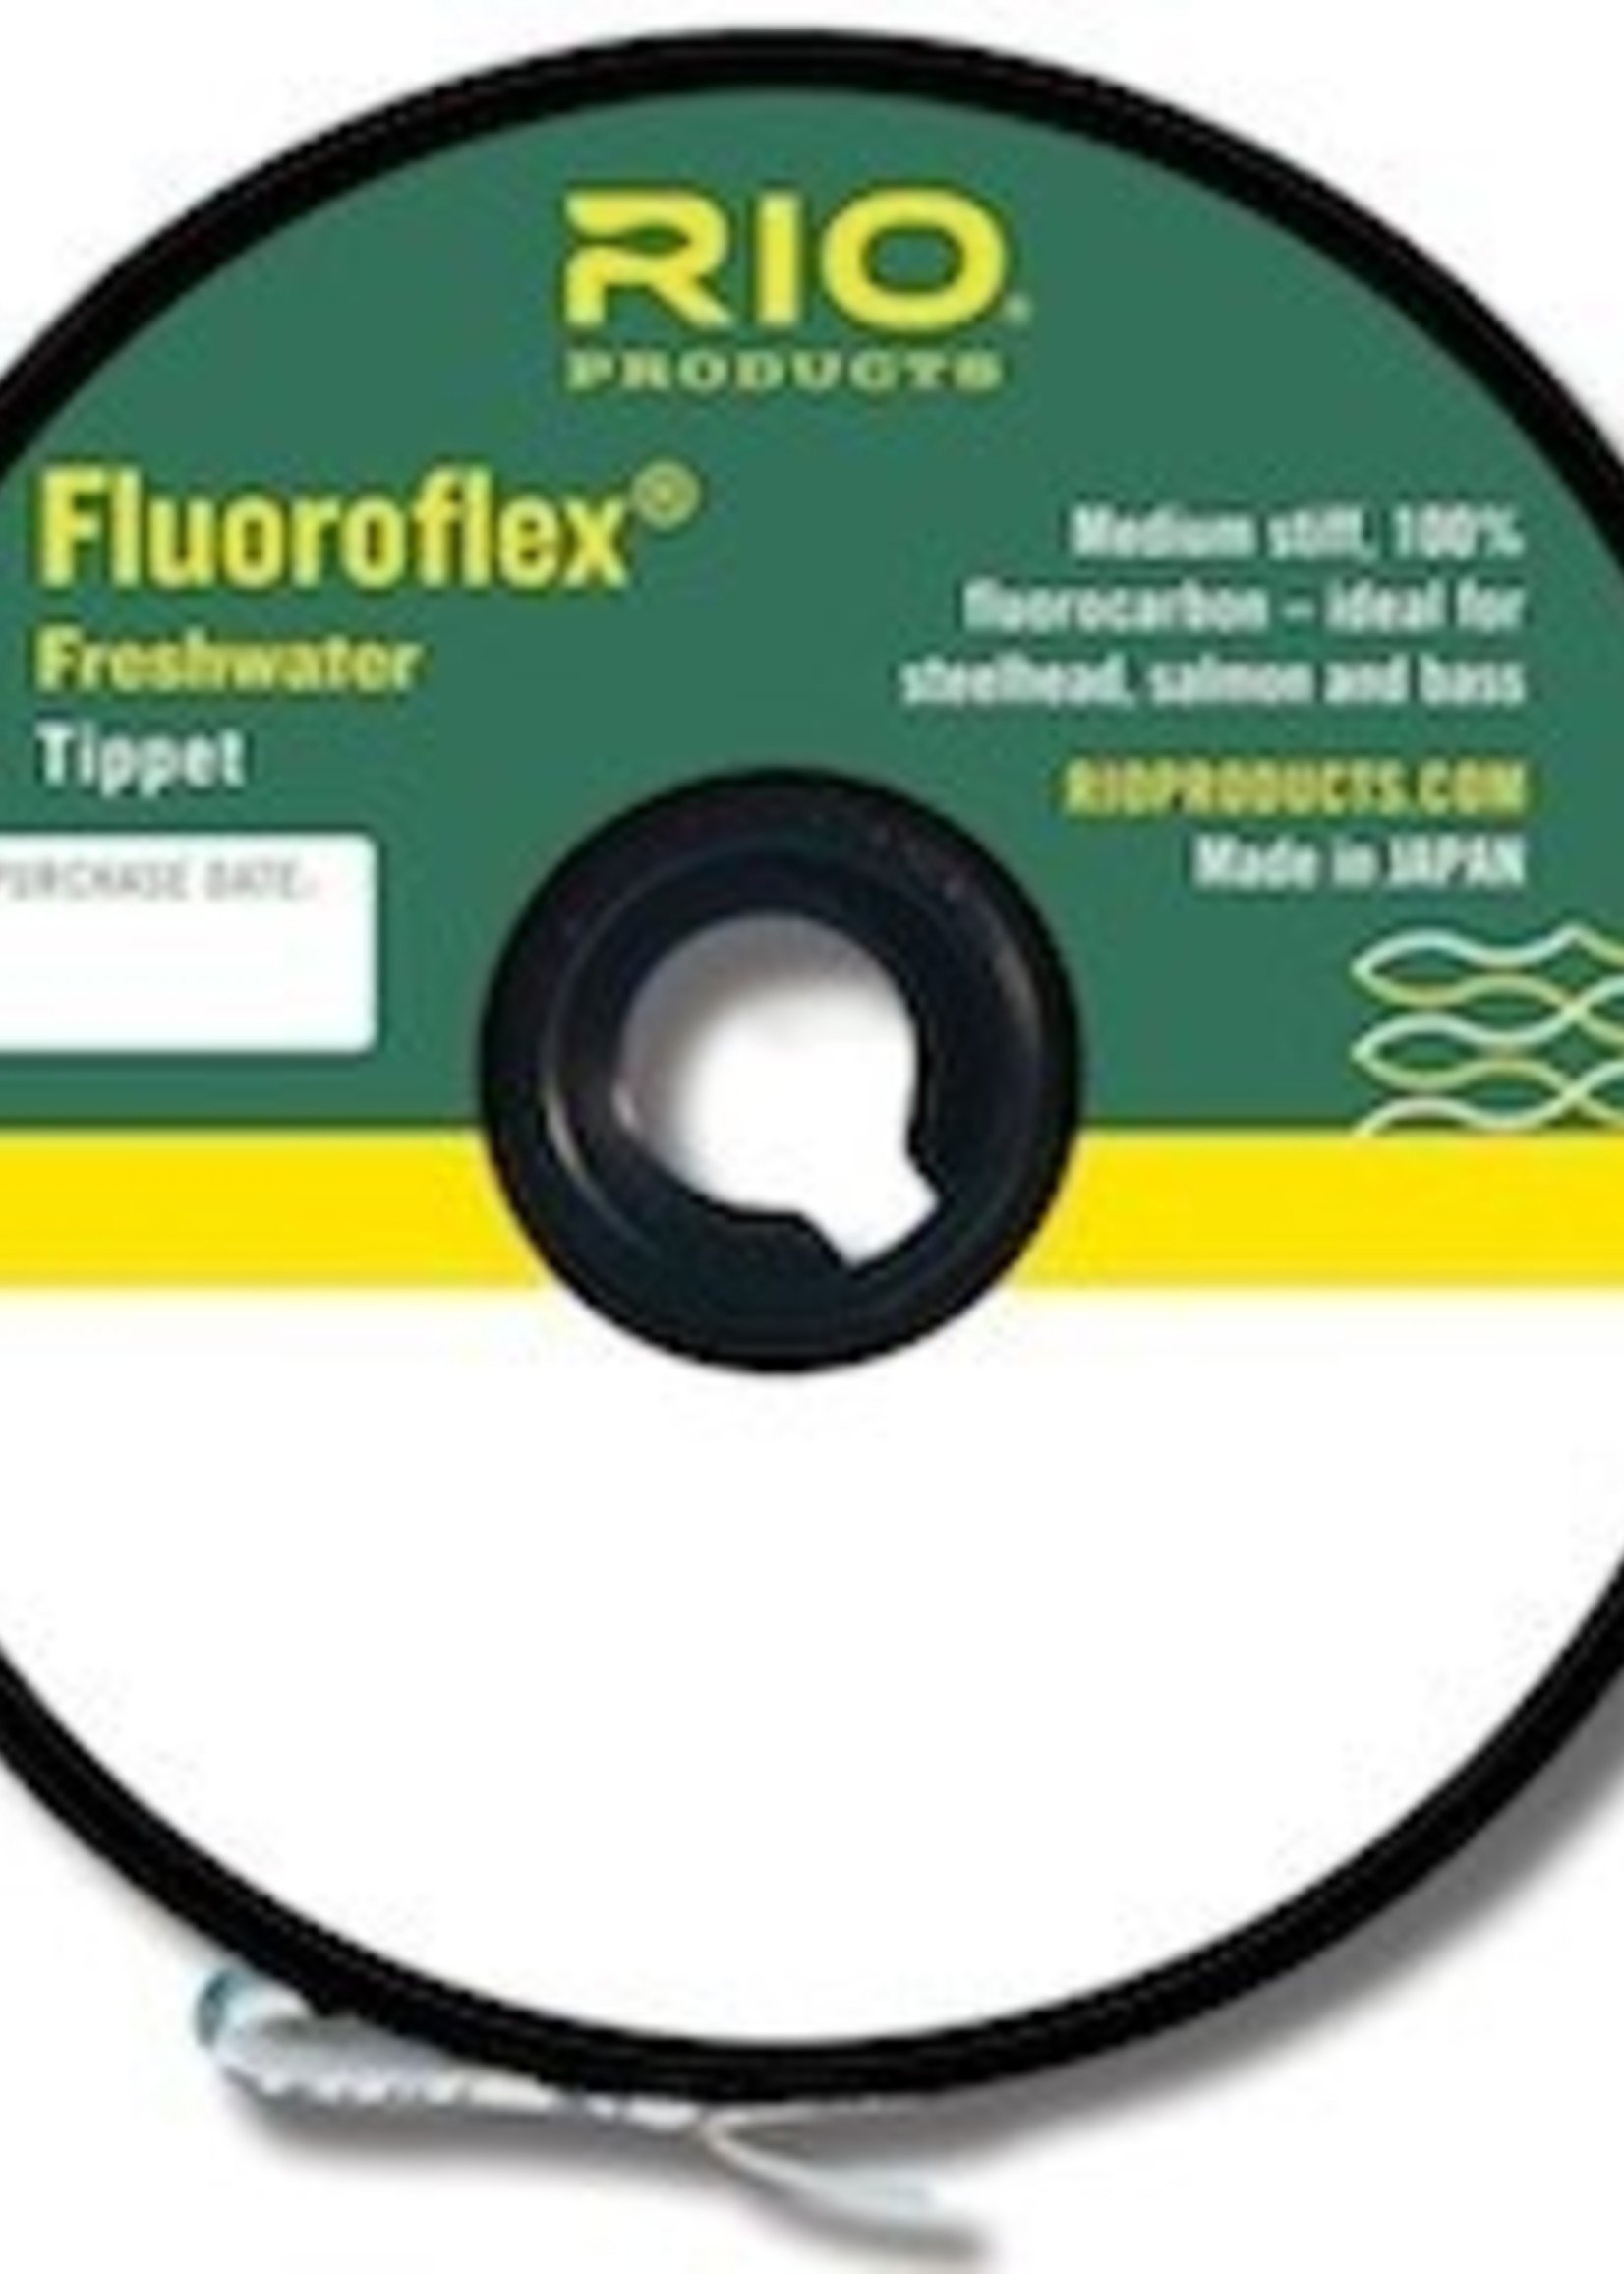 3X Neuf Livraison gratuite Rio Fluoroflex Freshwater Tippet 